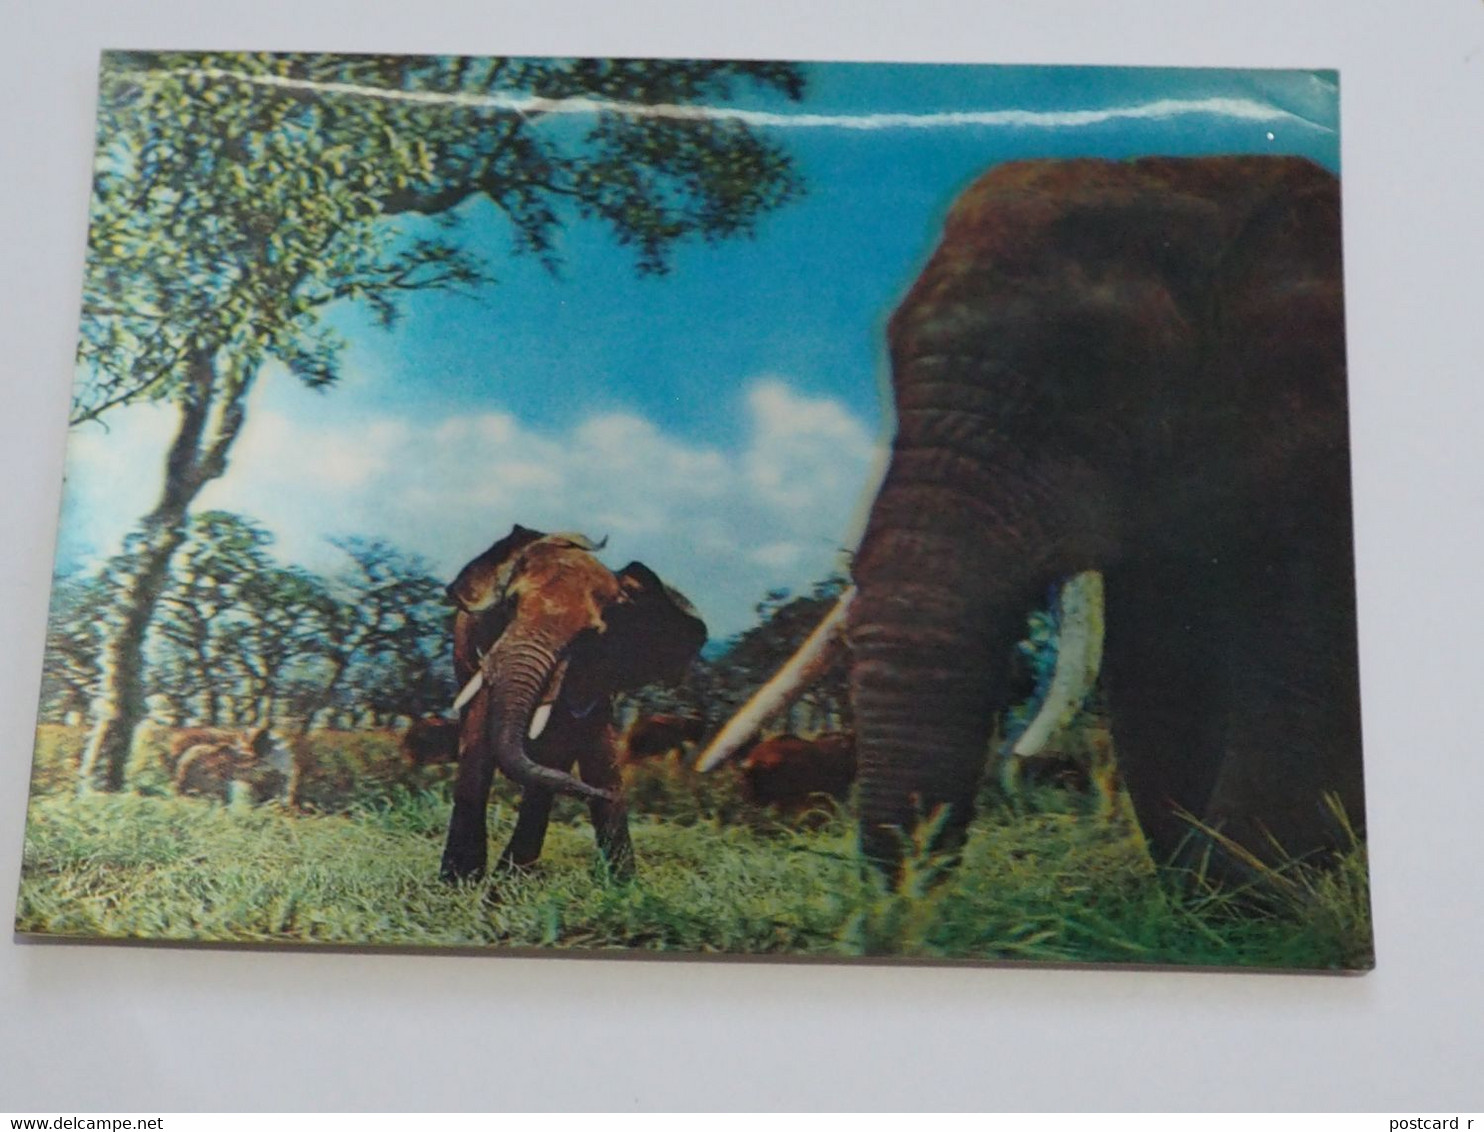 3d 3 D Lenticular Stereo Postcard Elephants   A 215 - Cartes Stéréoscopiques